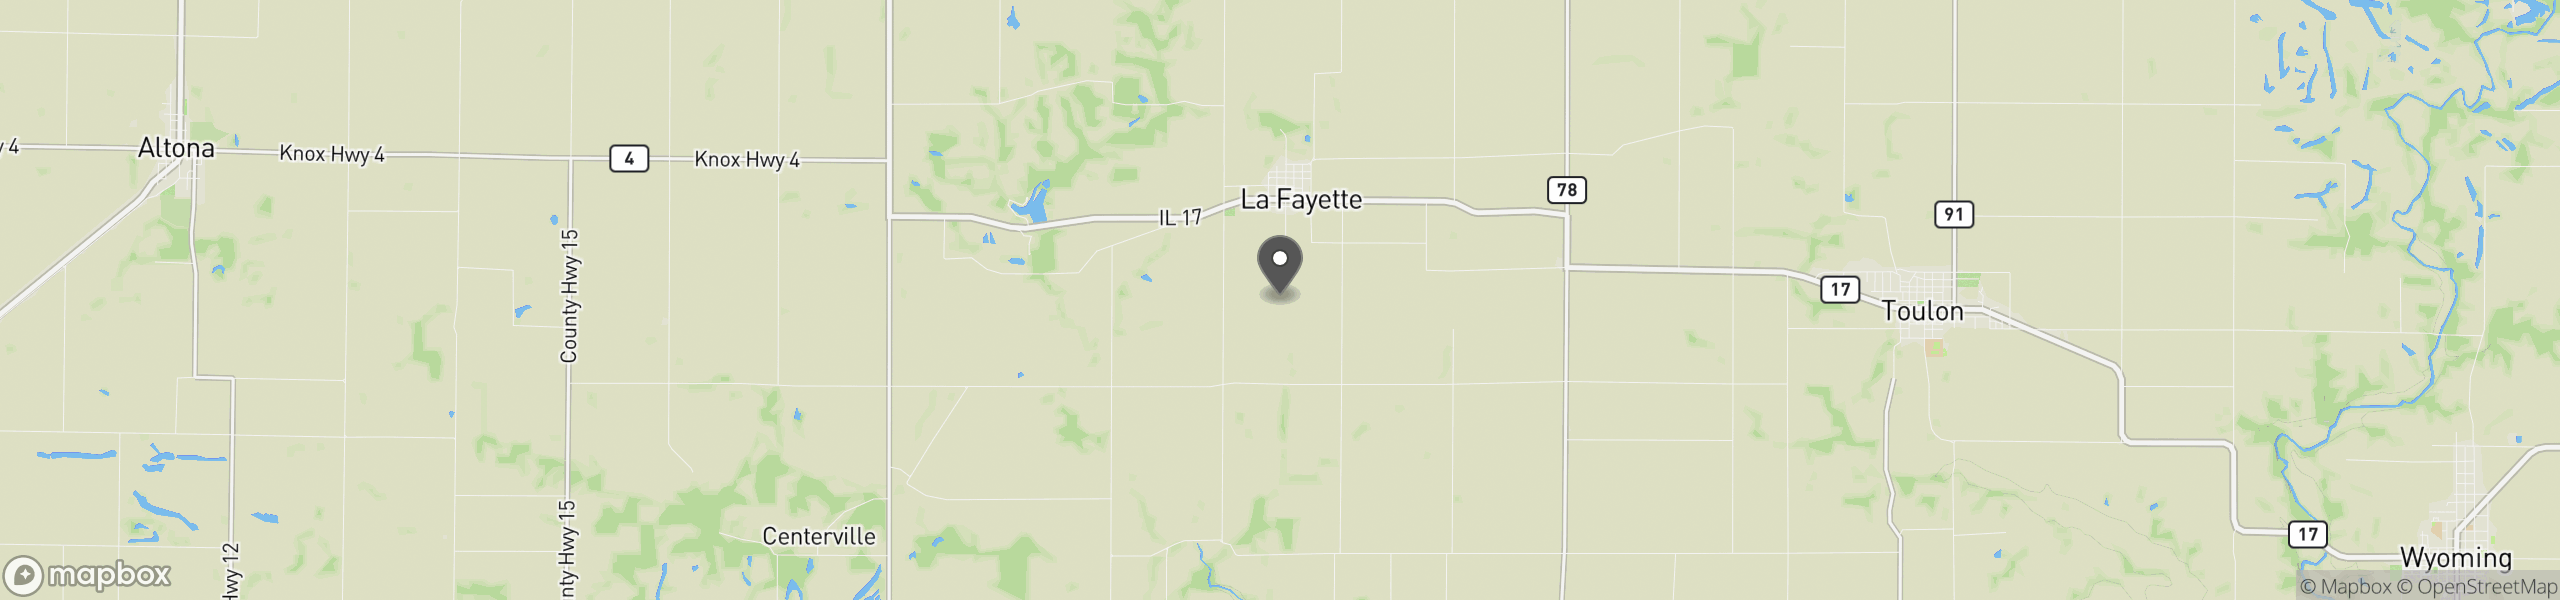 La Fayette, IL 61449